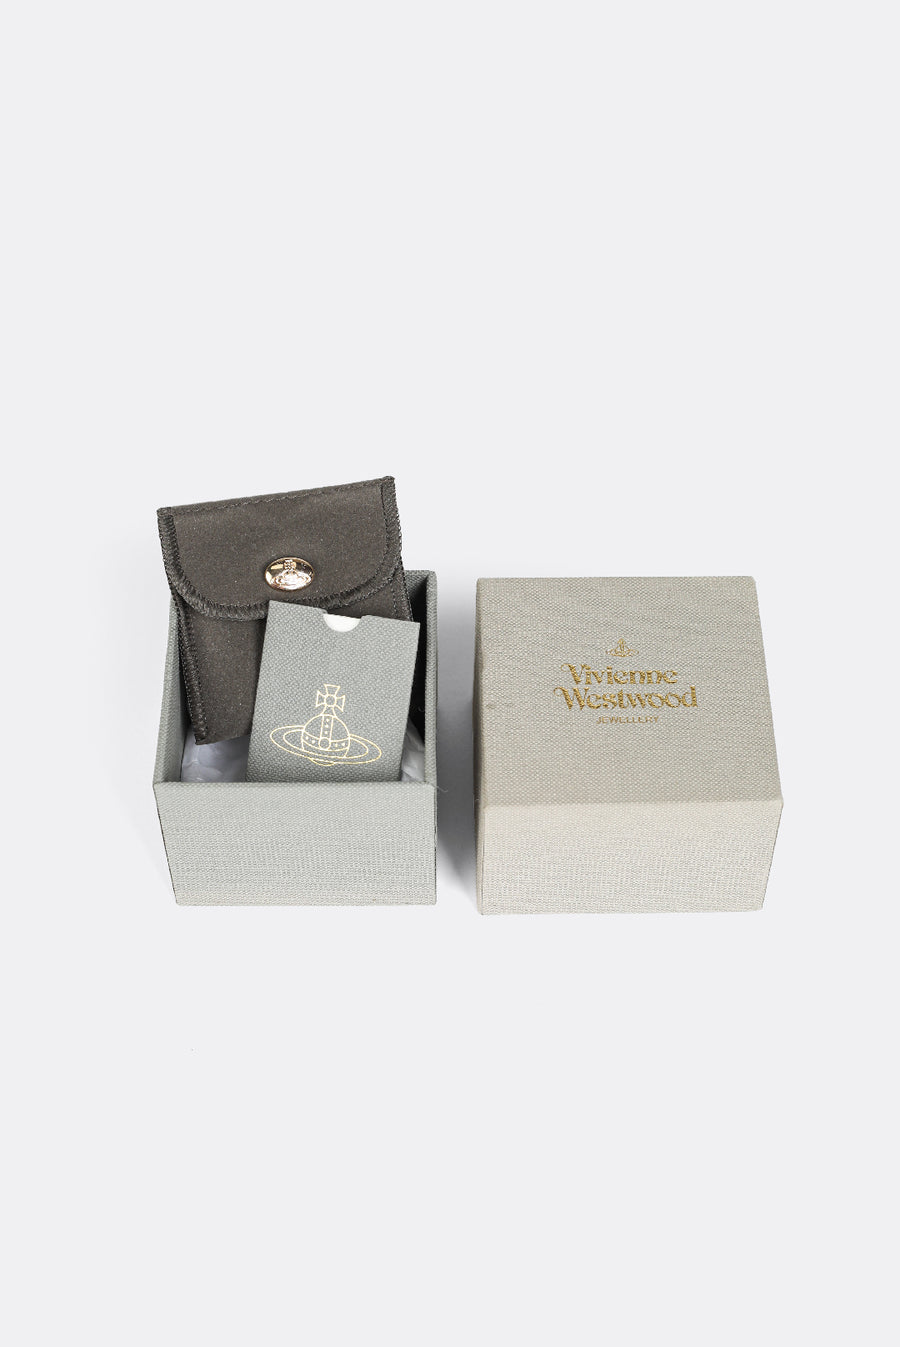 Vintage Vivienne Westwood Necklace